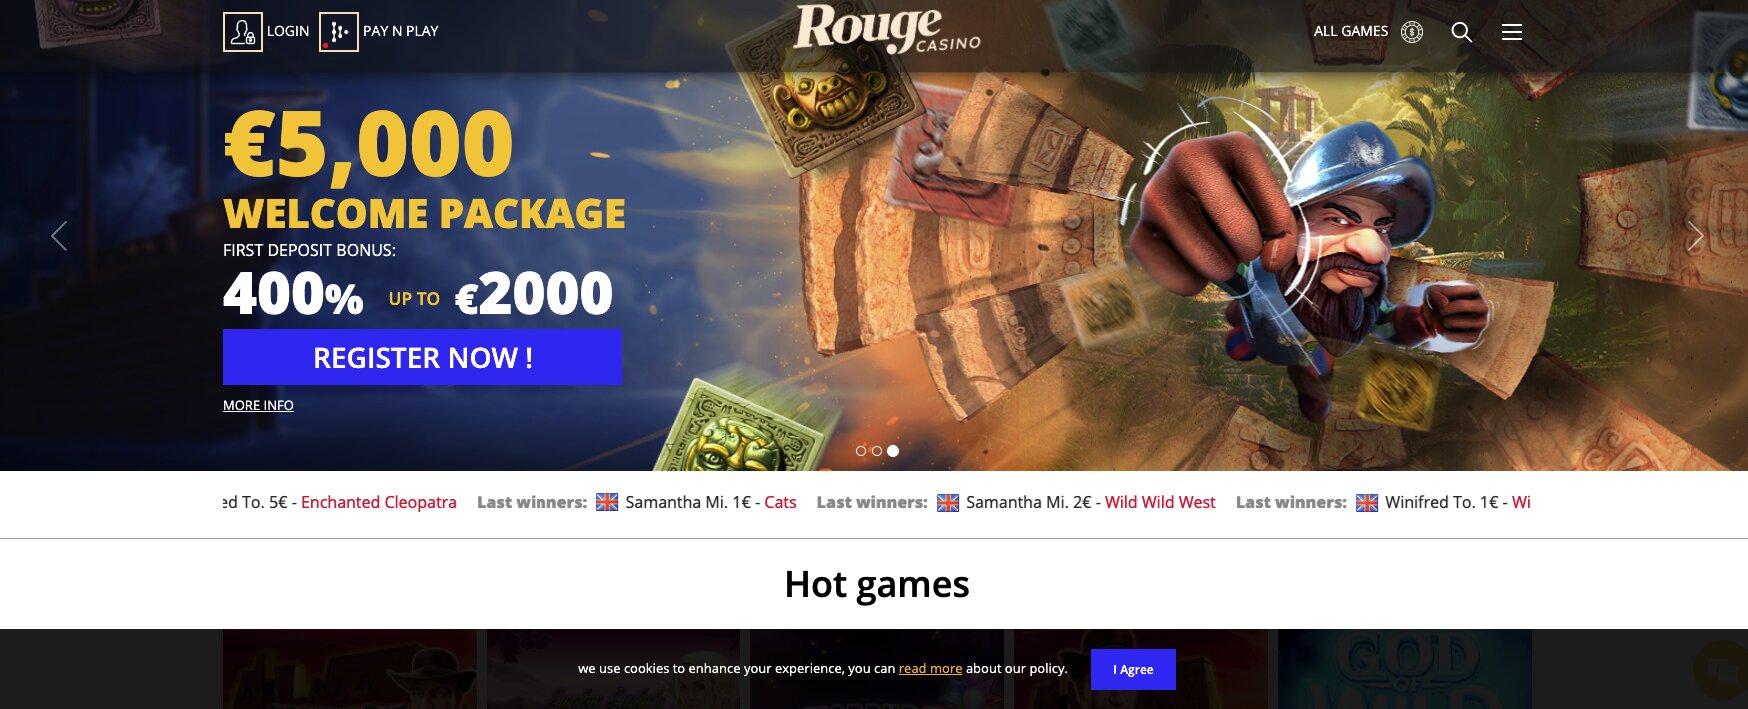 rogue online mobile casino list